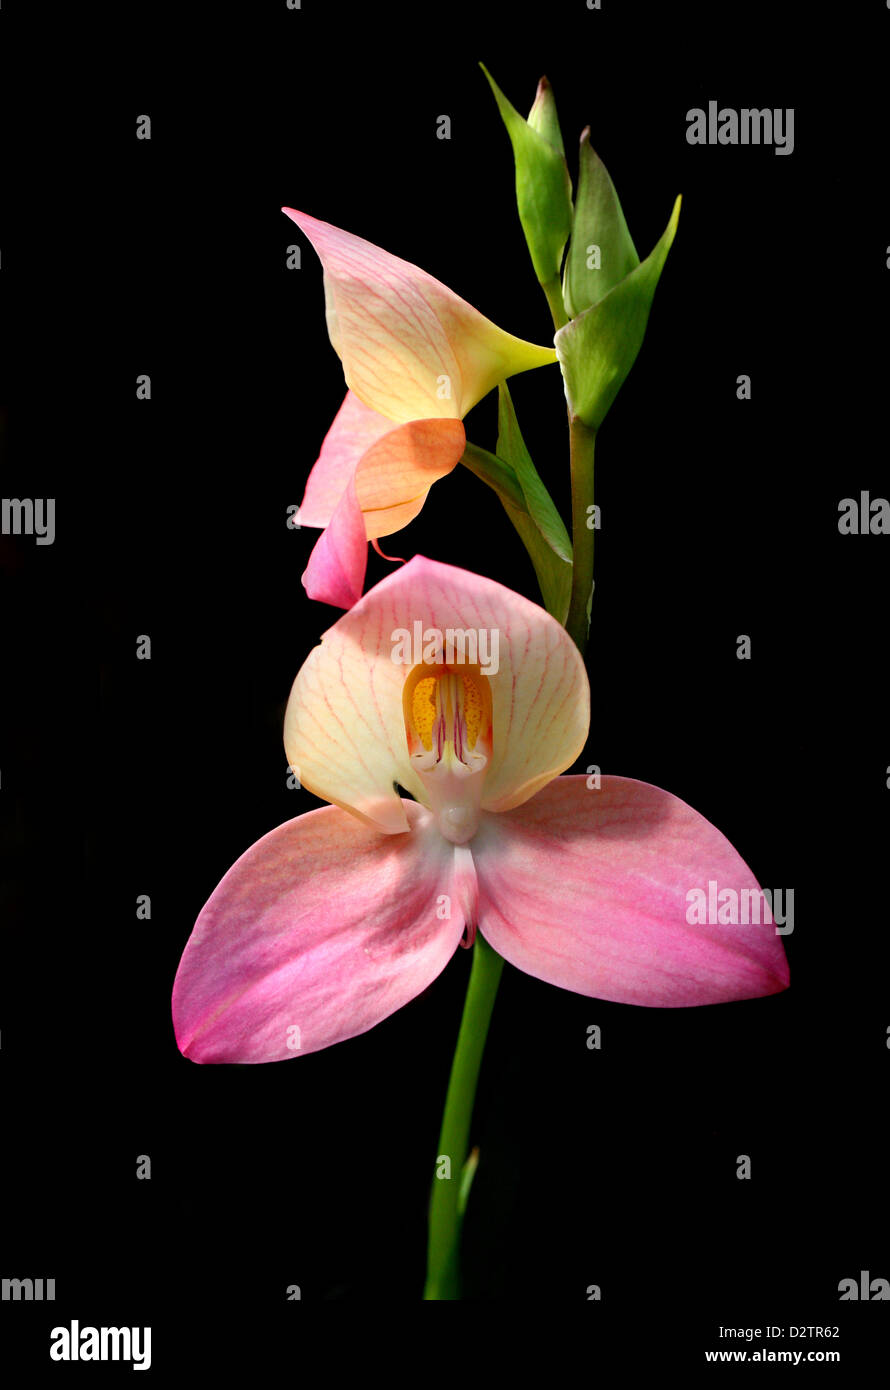 Orchid, Disa Kewdior, Orchidaceae. Hybrid Orchid (1986) Disa Kewensis (Seed parent) x Disa Diores (Pollen parent). Genus Native Stock Photo